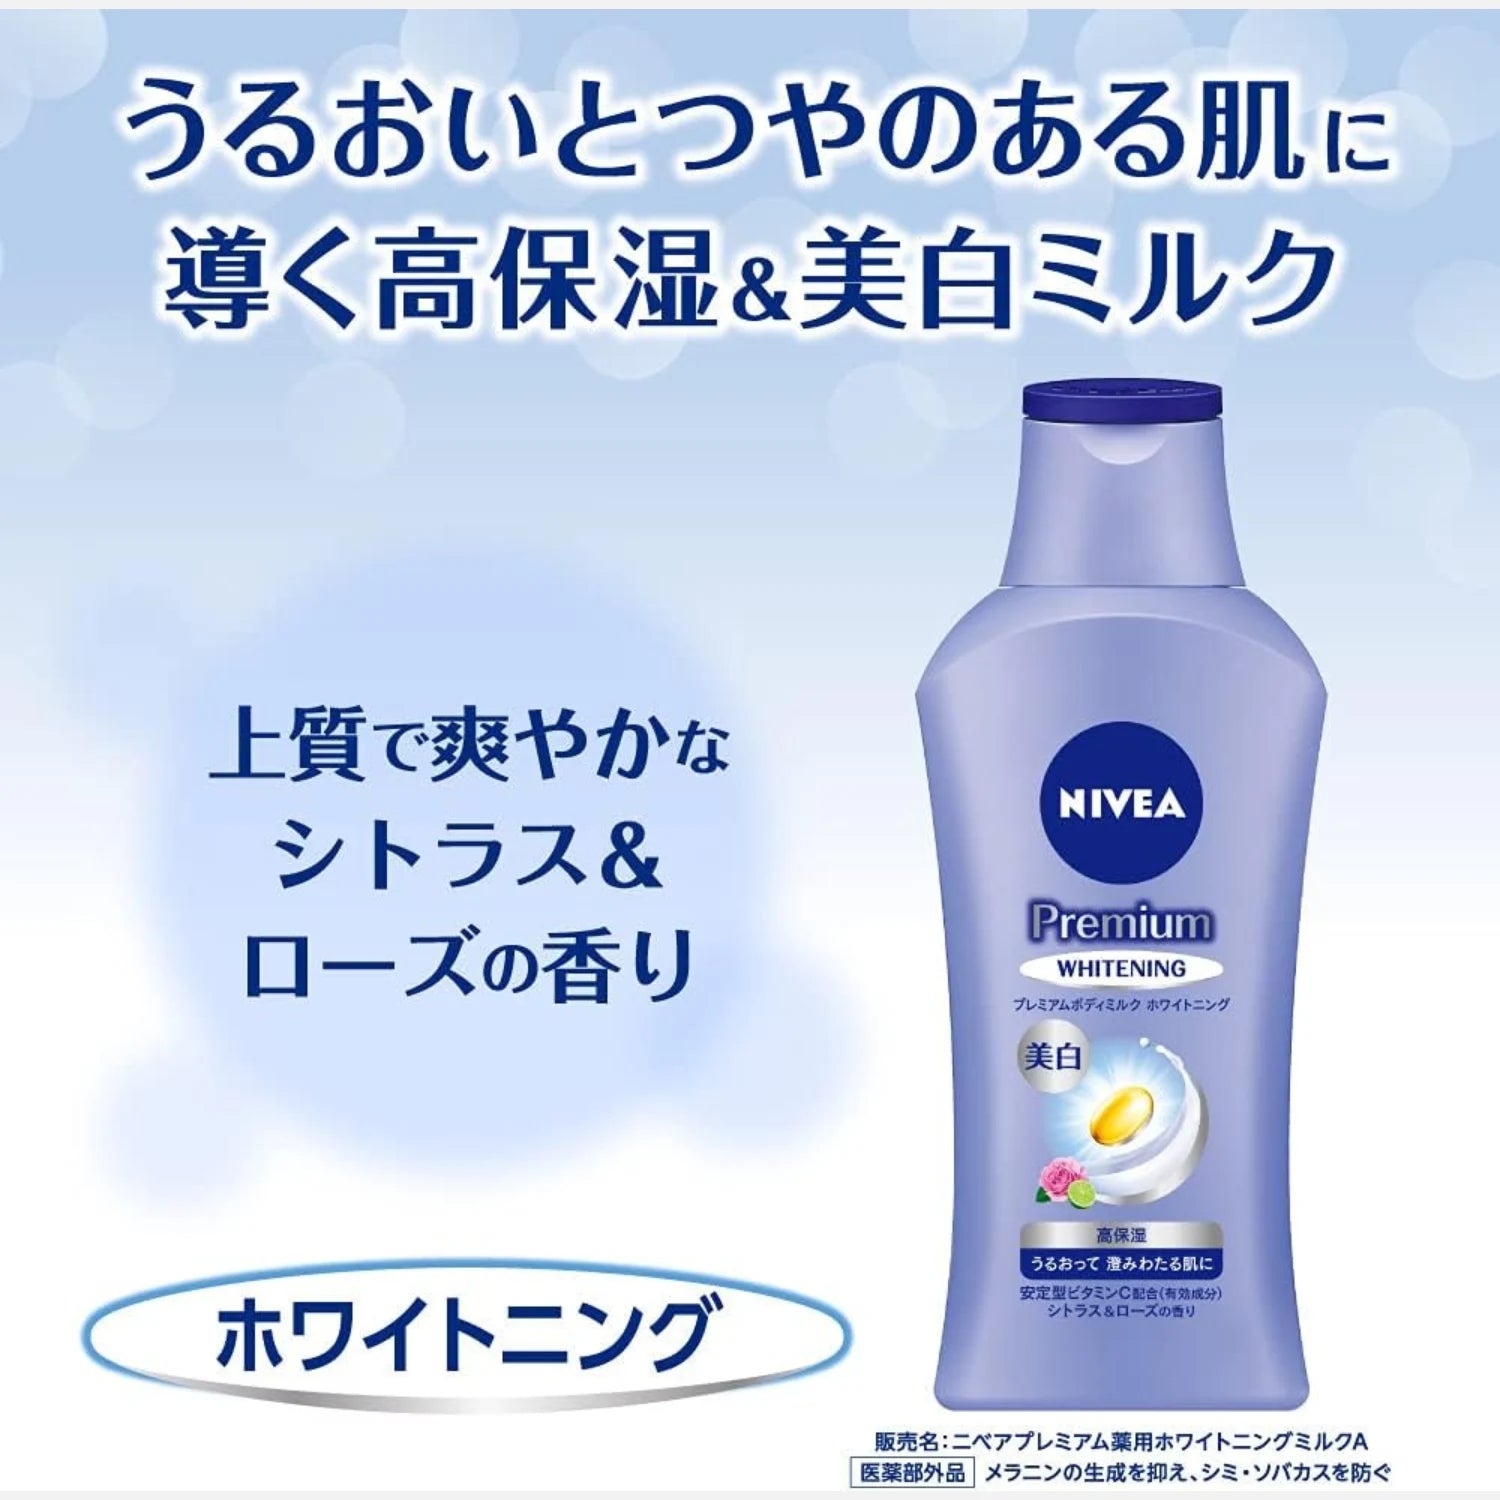 Nivea Japan Premium Whitening Body Milk 190ml - Buy Me Japan